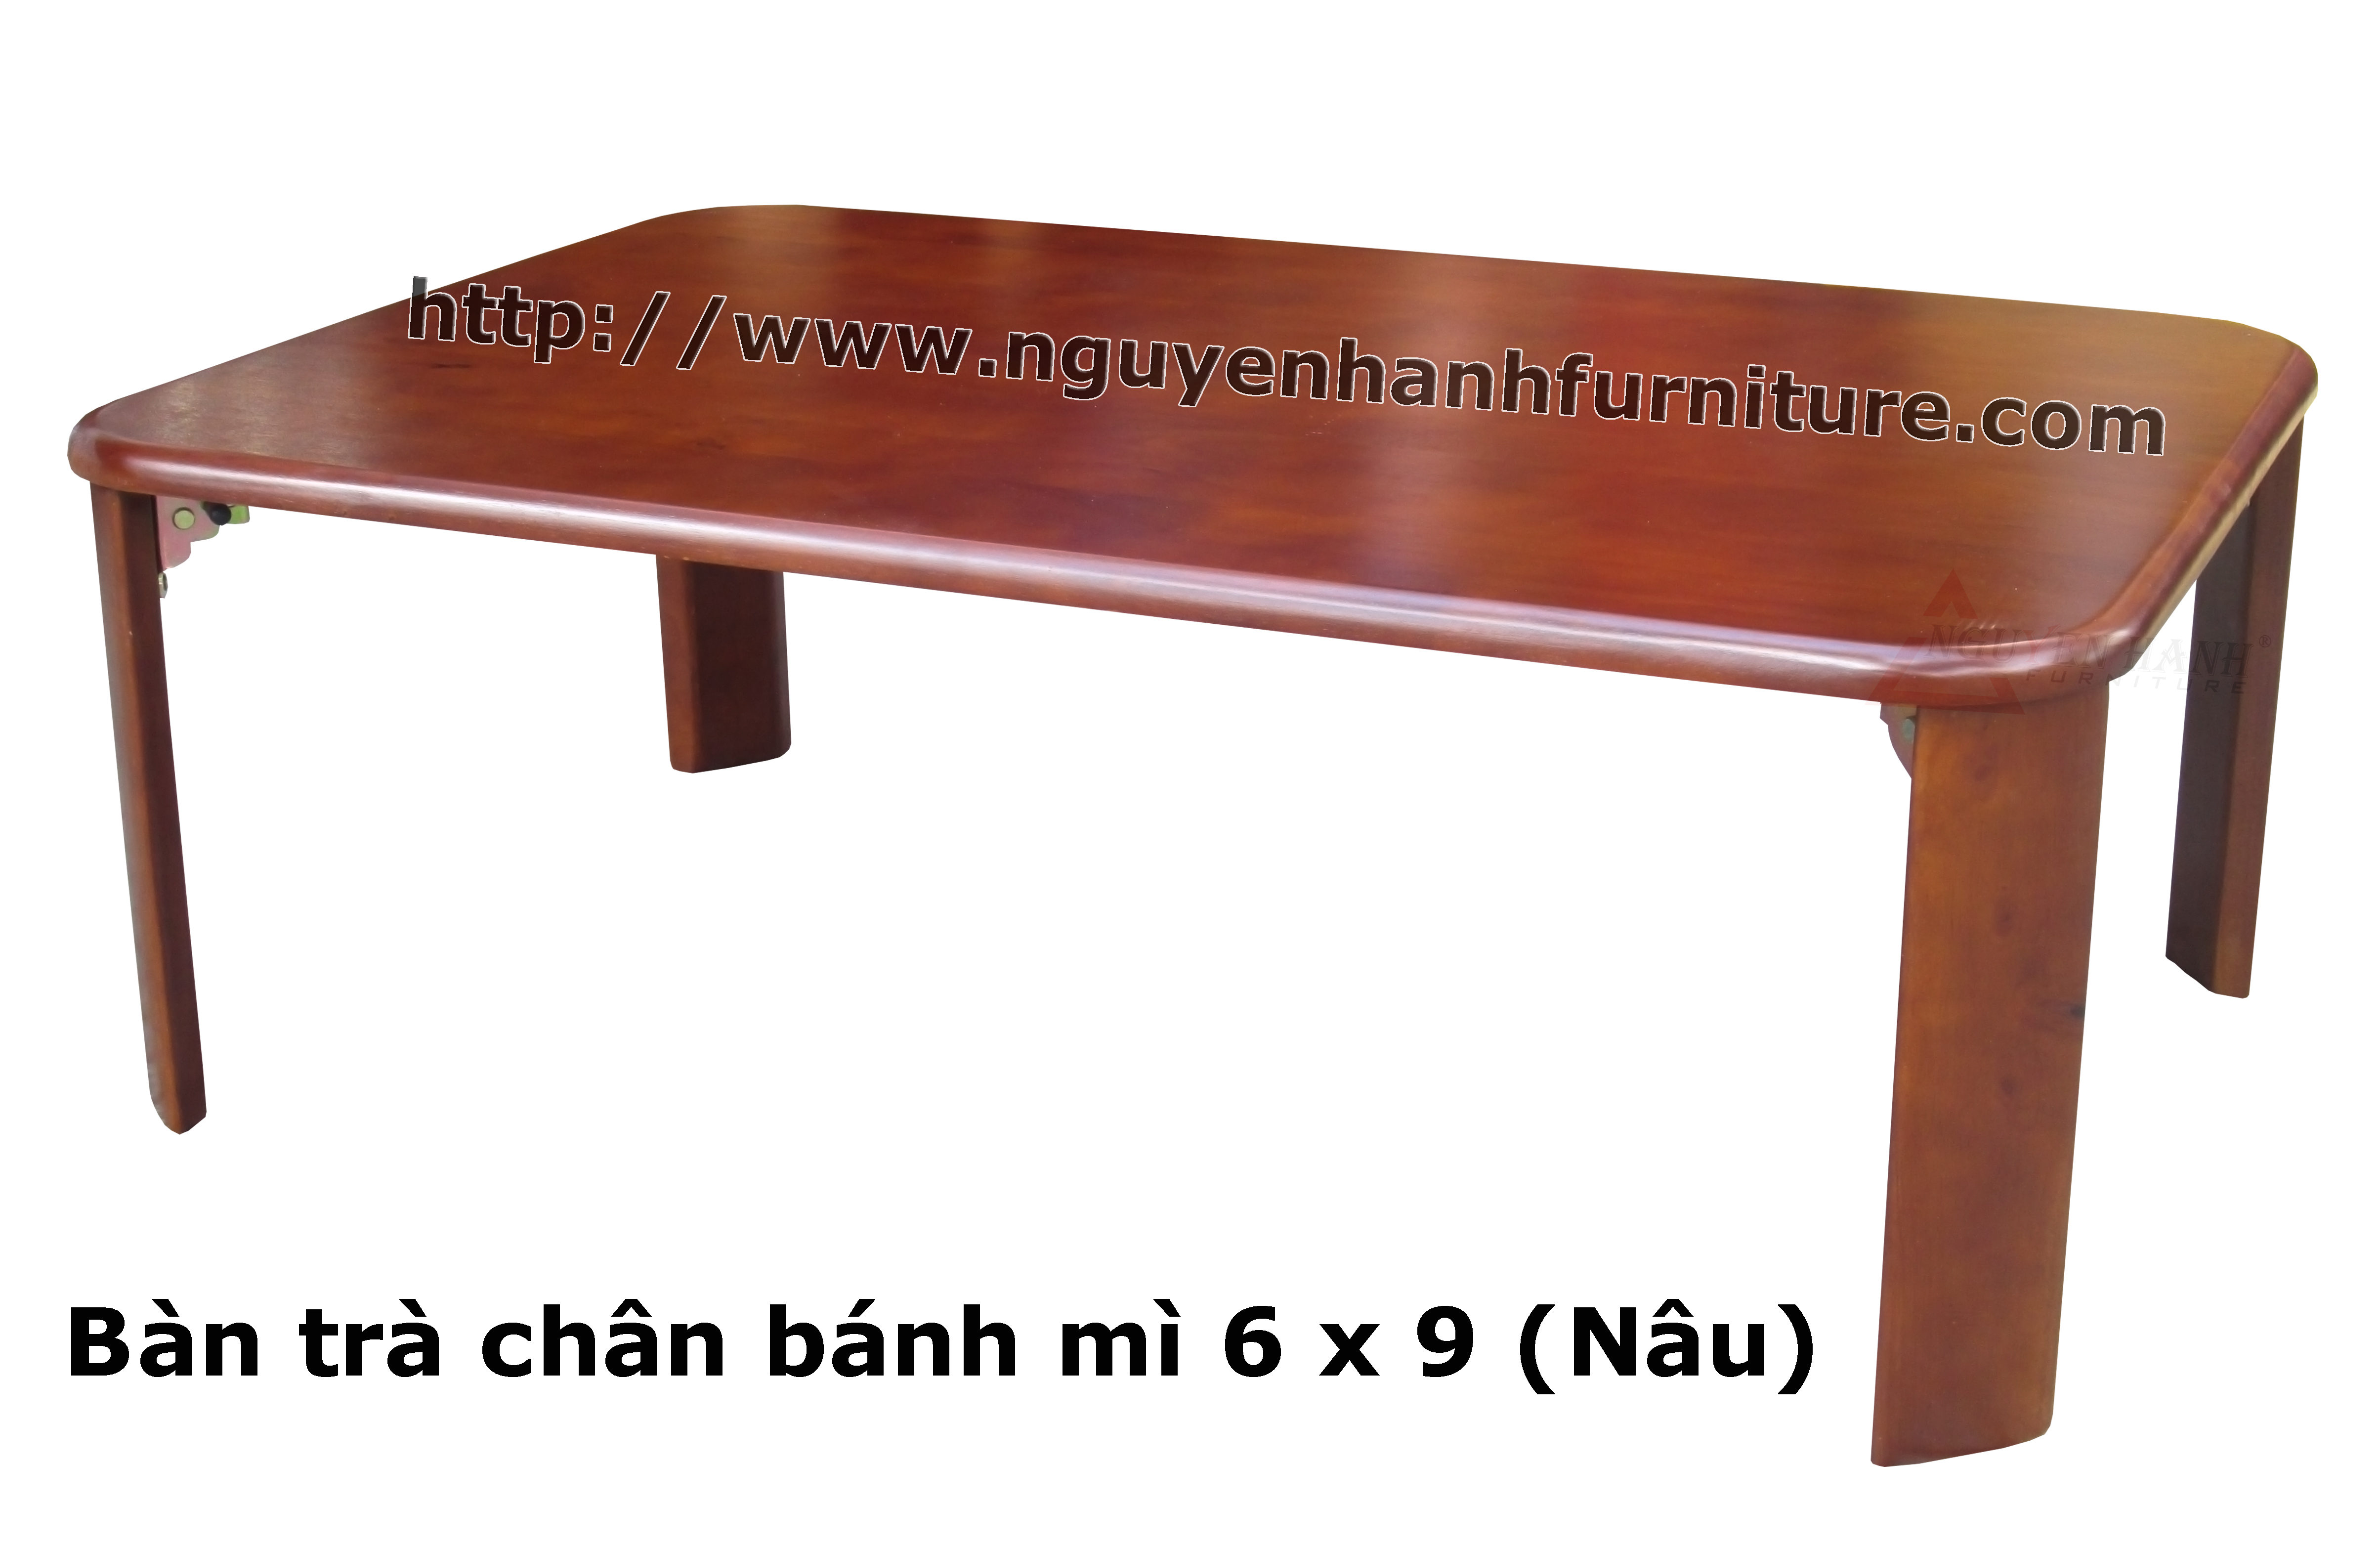 Name product: 6 x 9 Bread shape Tea table (Brown) - Dimensions: 60 x 90 x 30 (H) - Description: Wood natural rubber